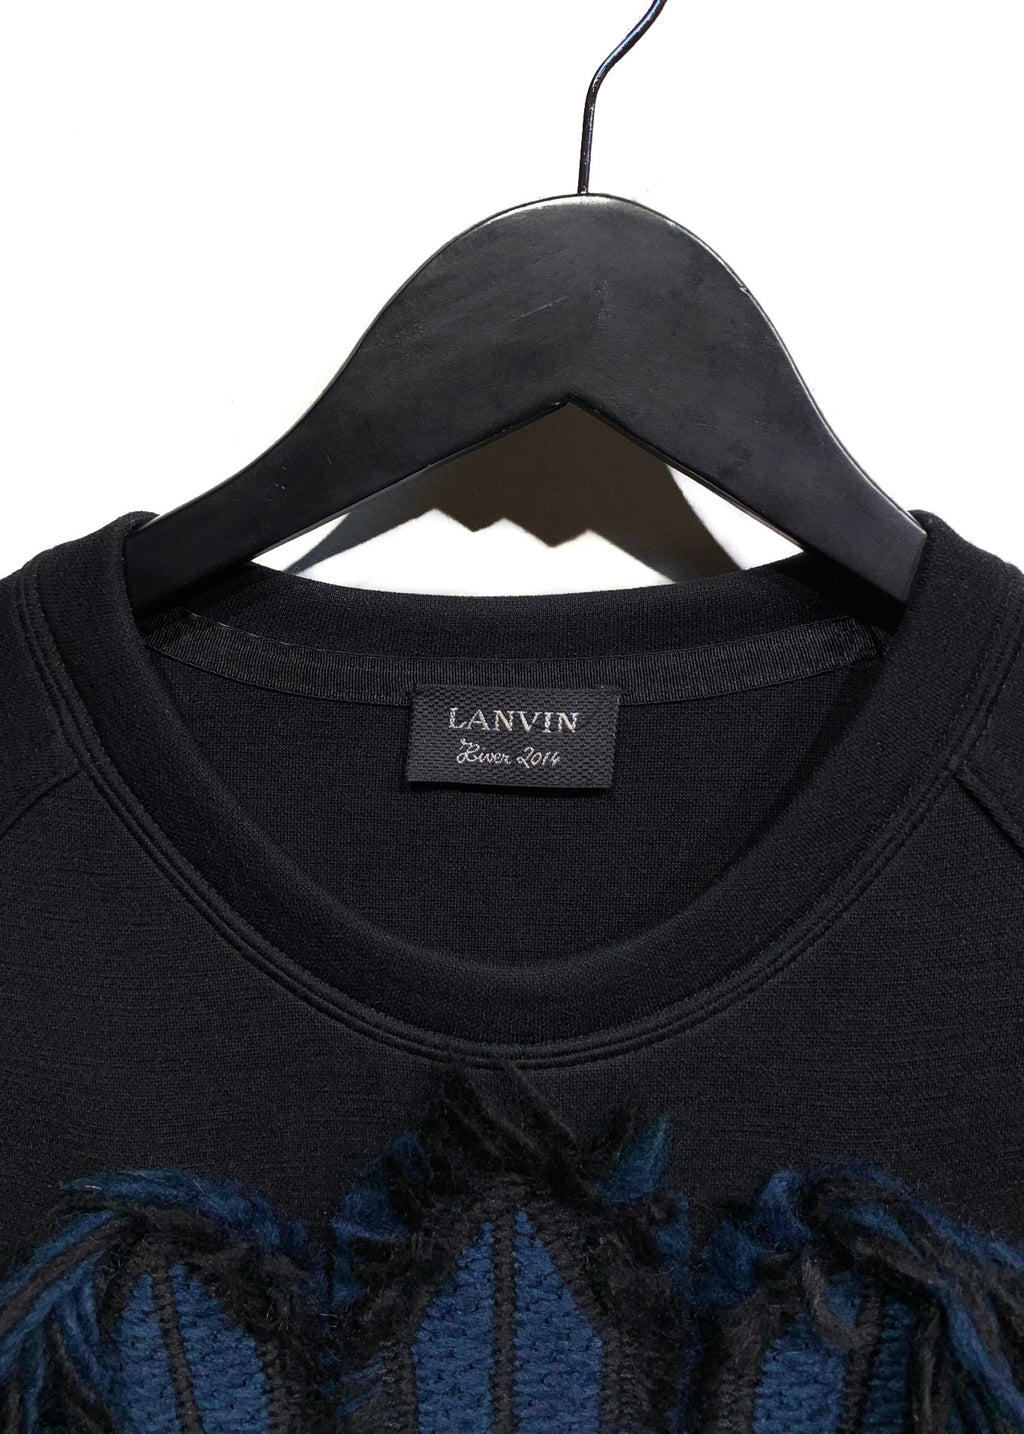 Lanvin Black Fringed Mask Embroidered Sweater